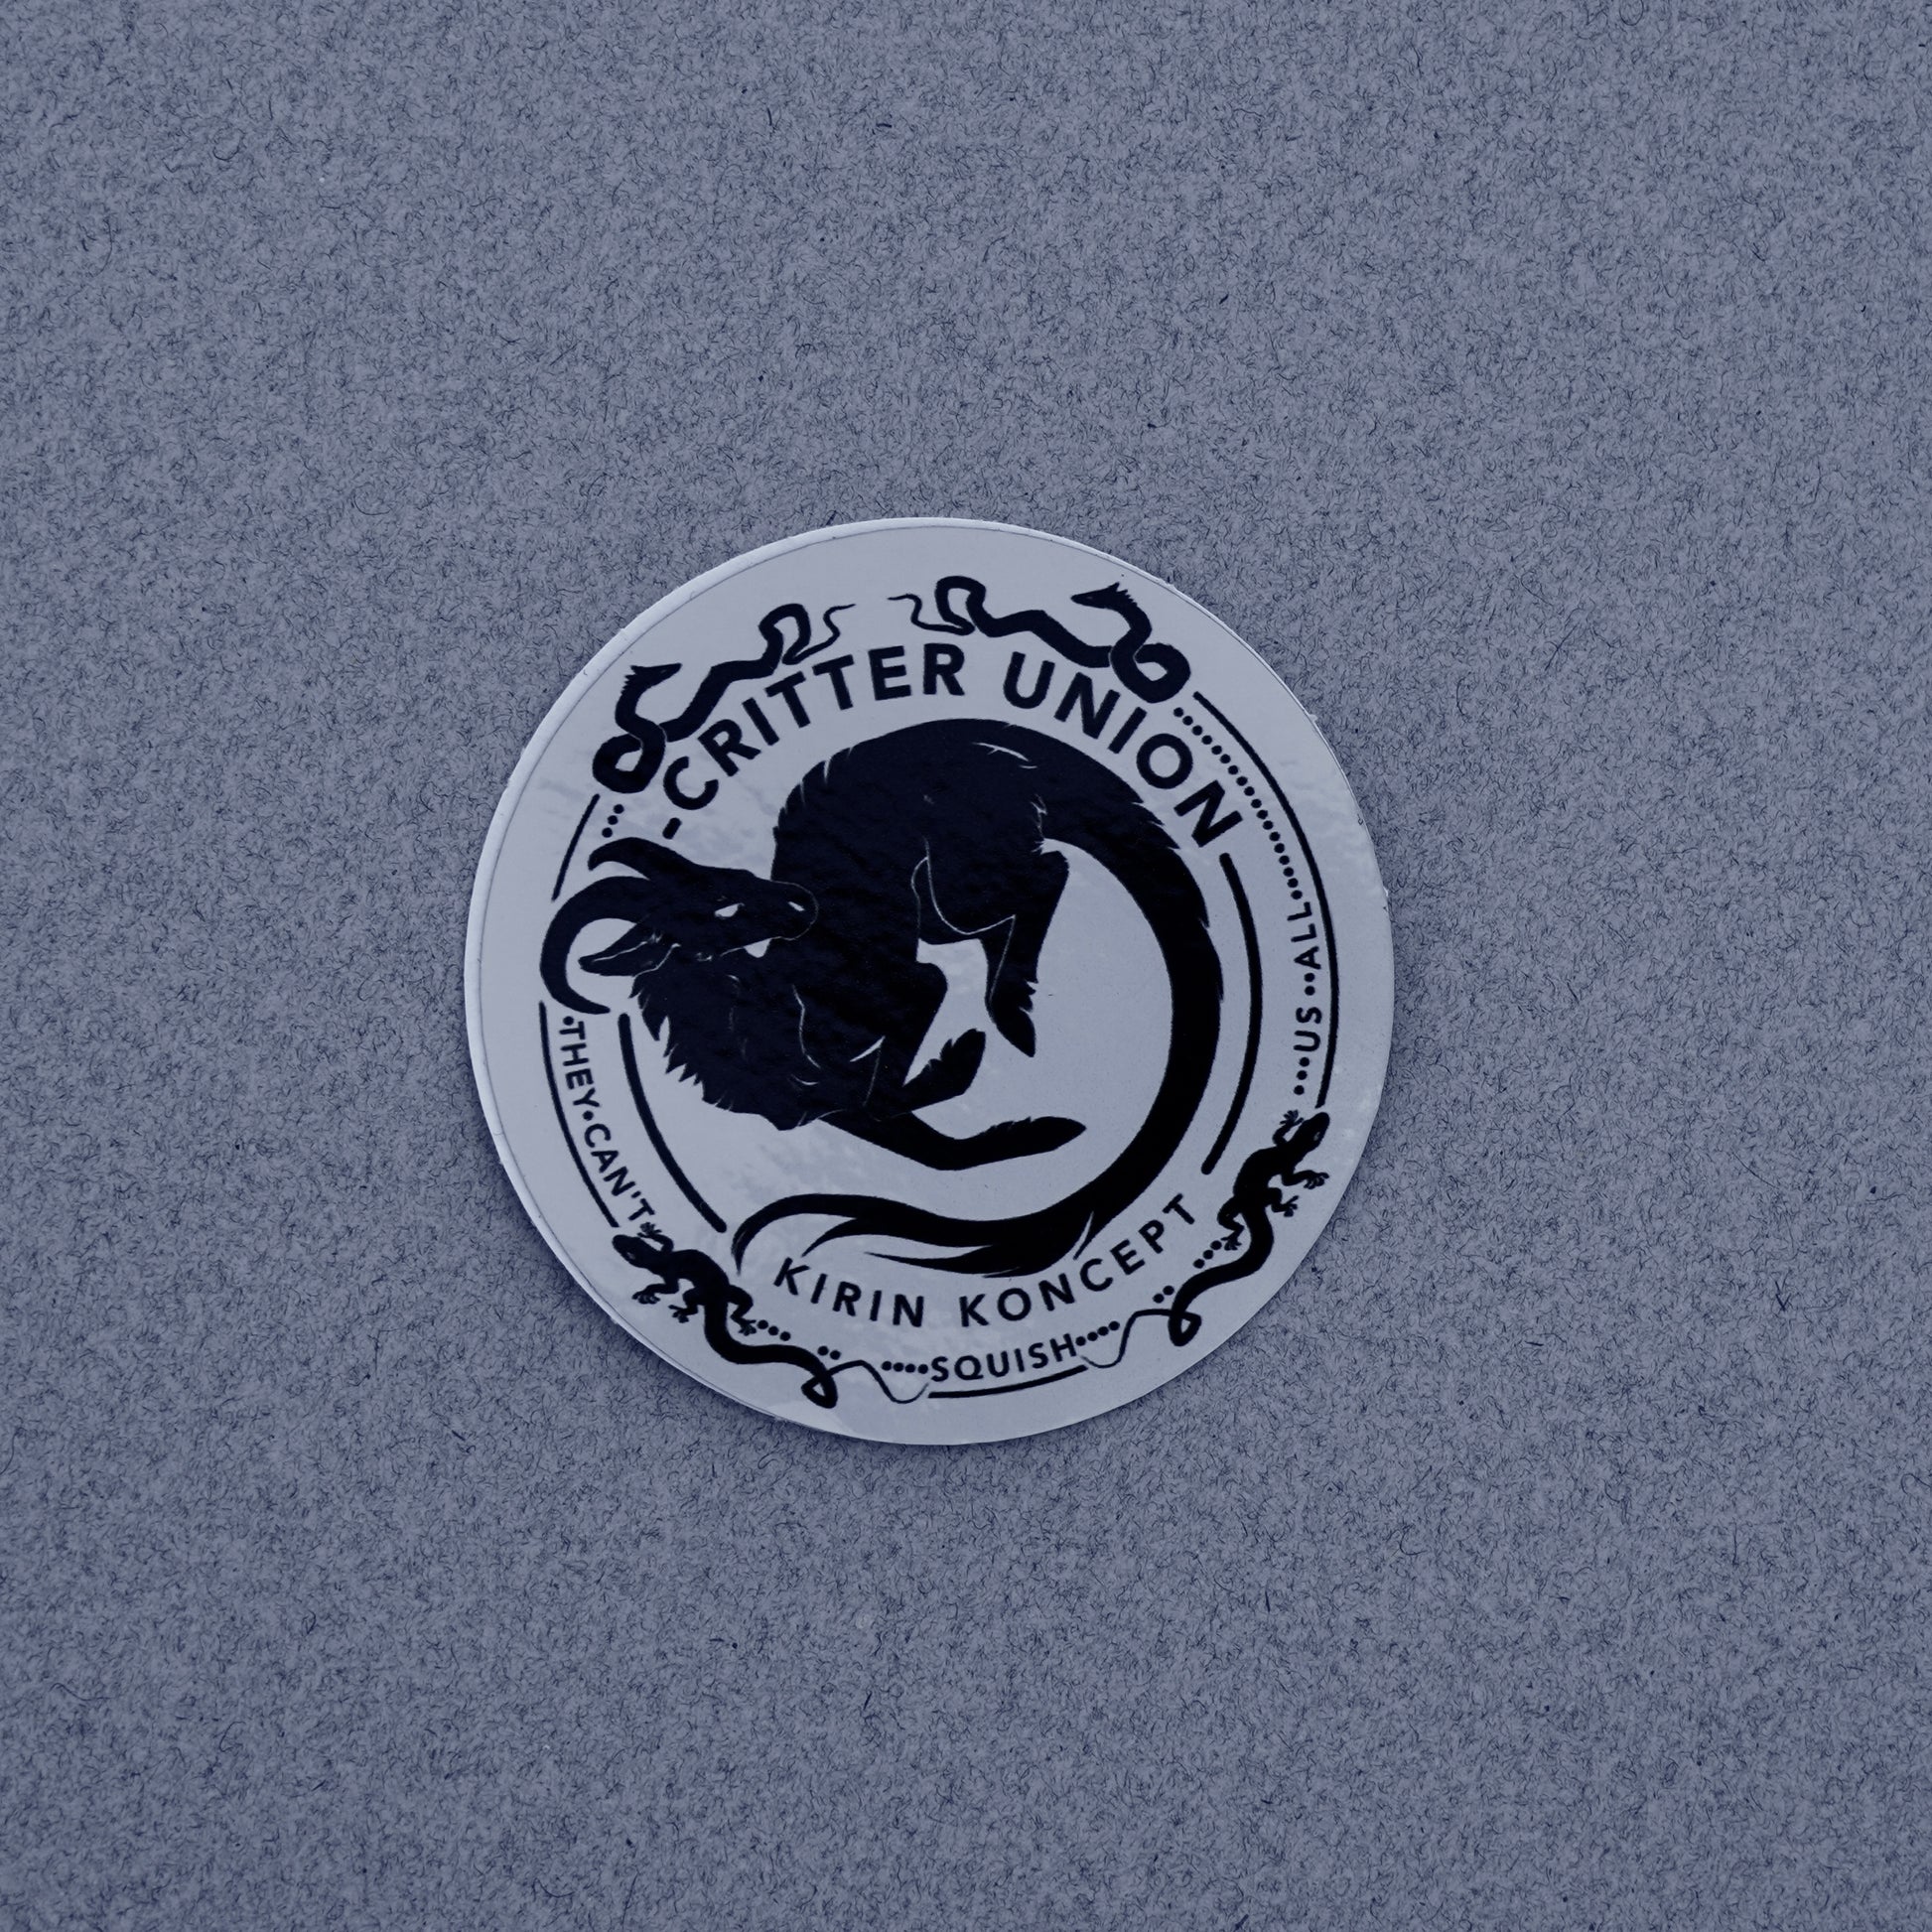 Critter union holographic vinyl sticker